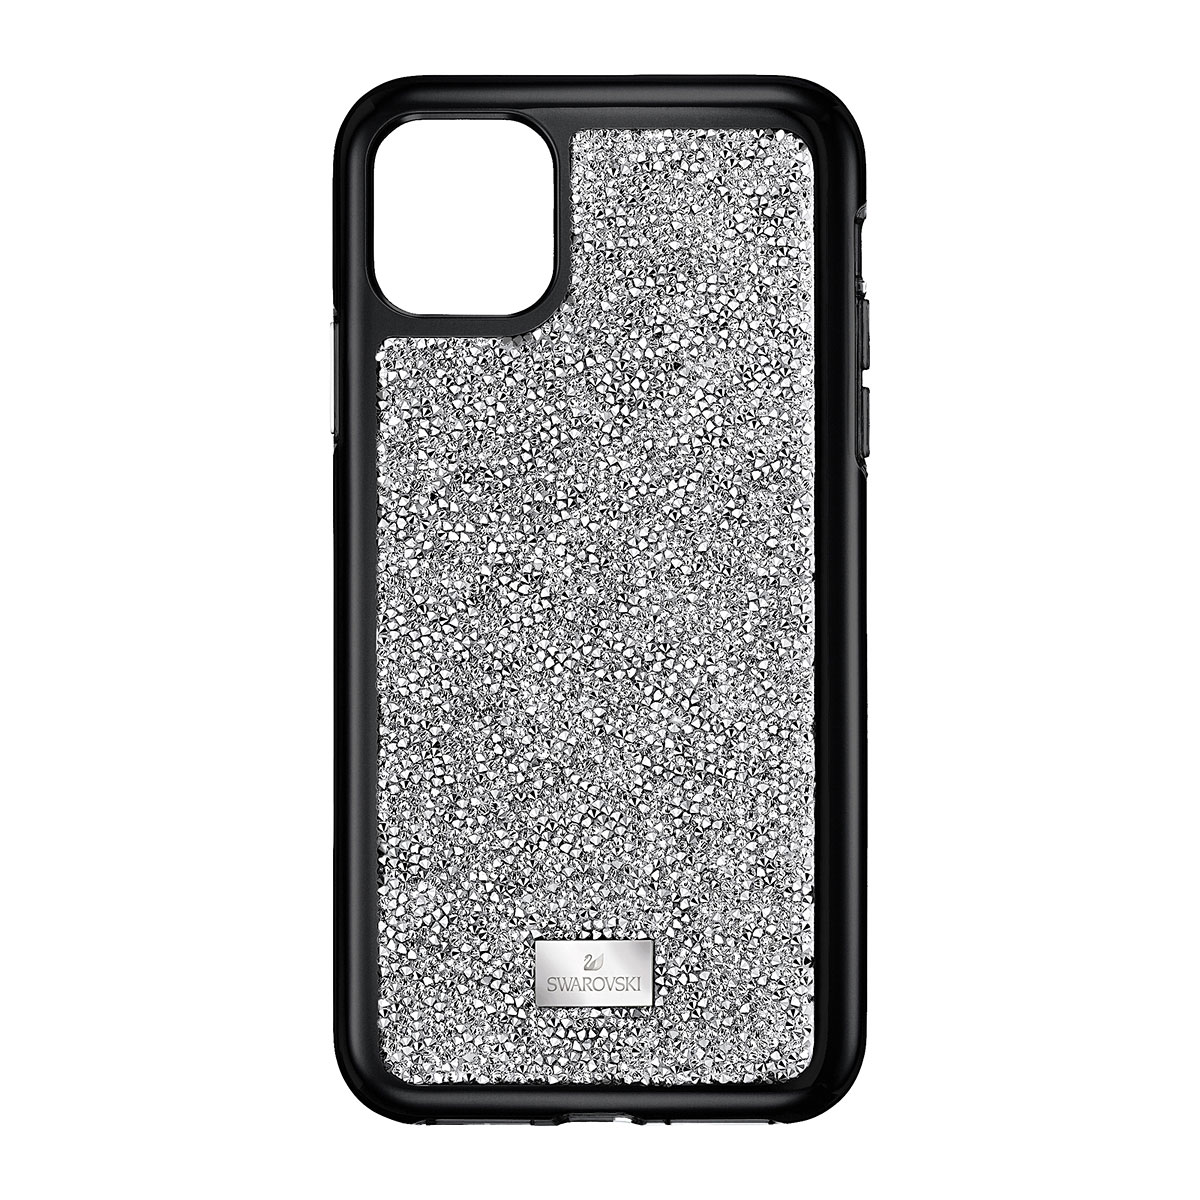 Swarovski Mobile Phone Case Glam Rock iPhone 11 Pro Case Stainless Steel Shiny